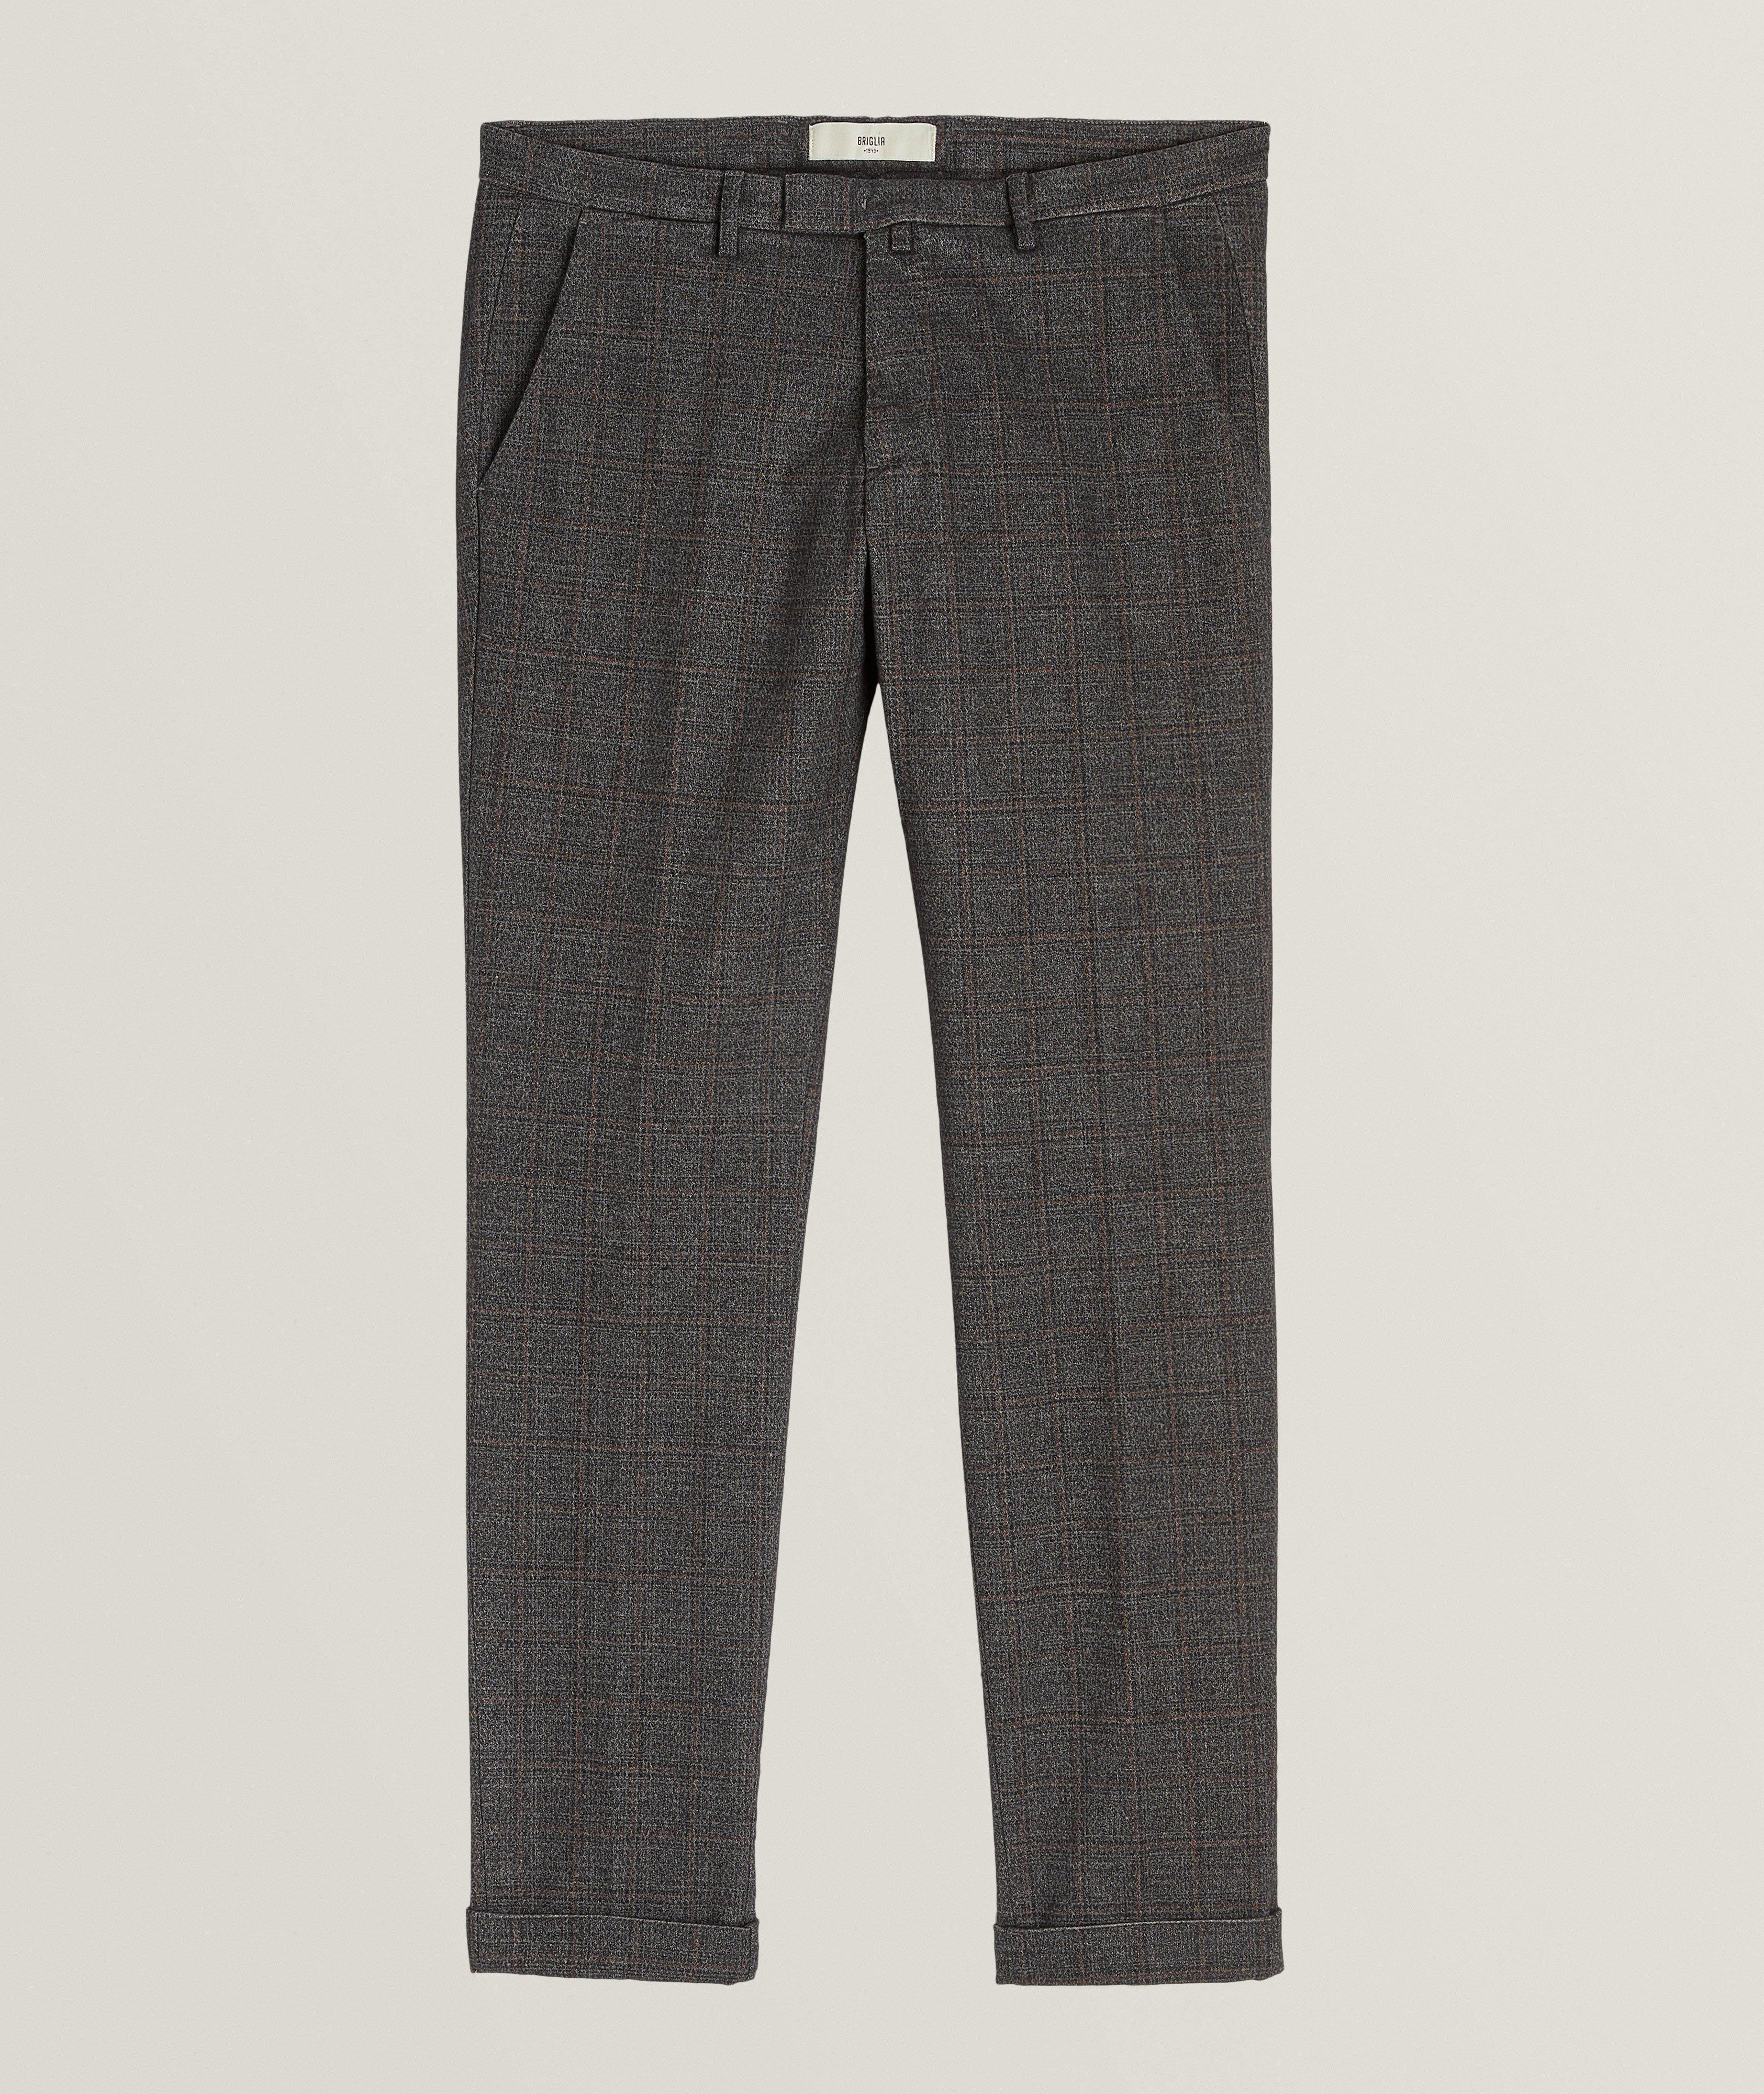 Checkered Cotton-Blend Pants image 0